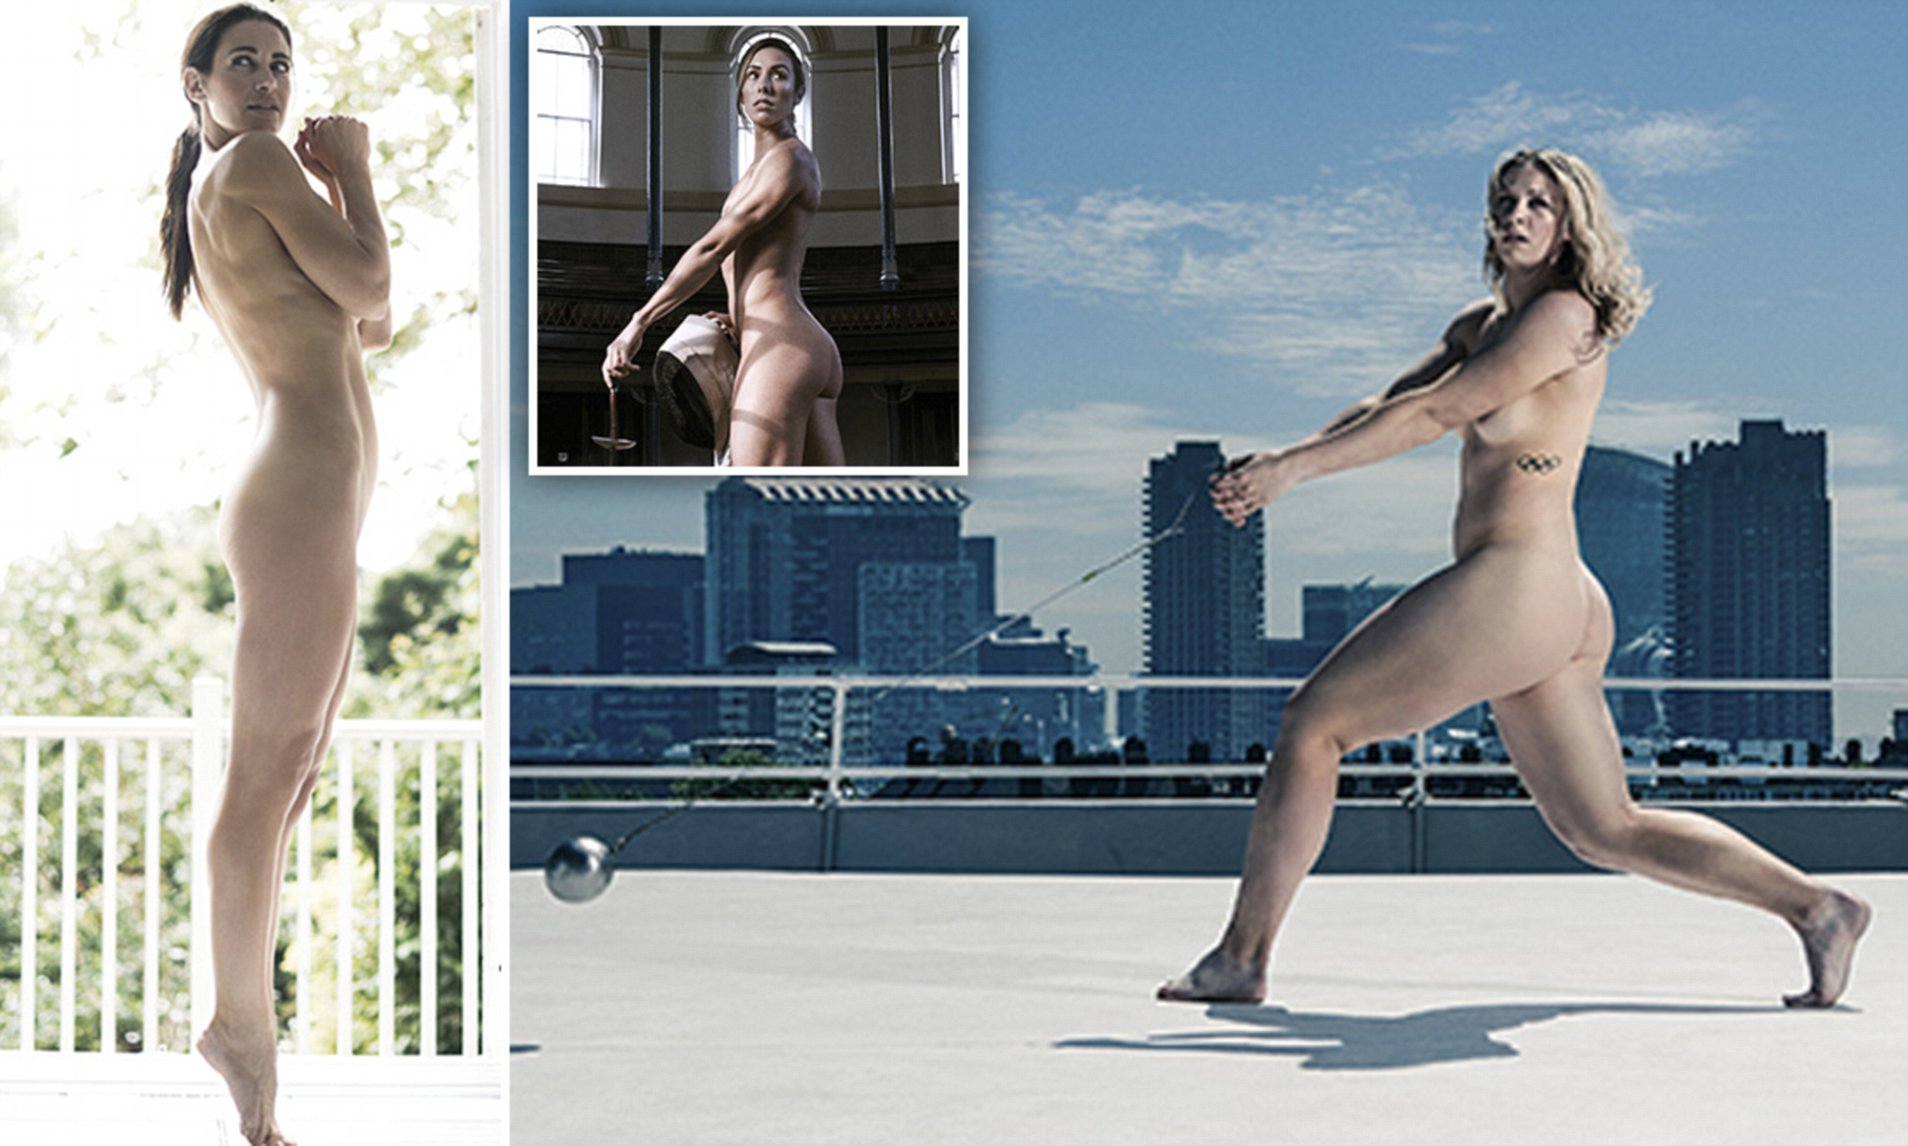 barbara swinton share nude female pro athletes photos